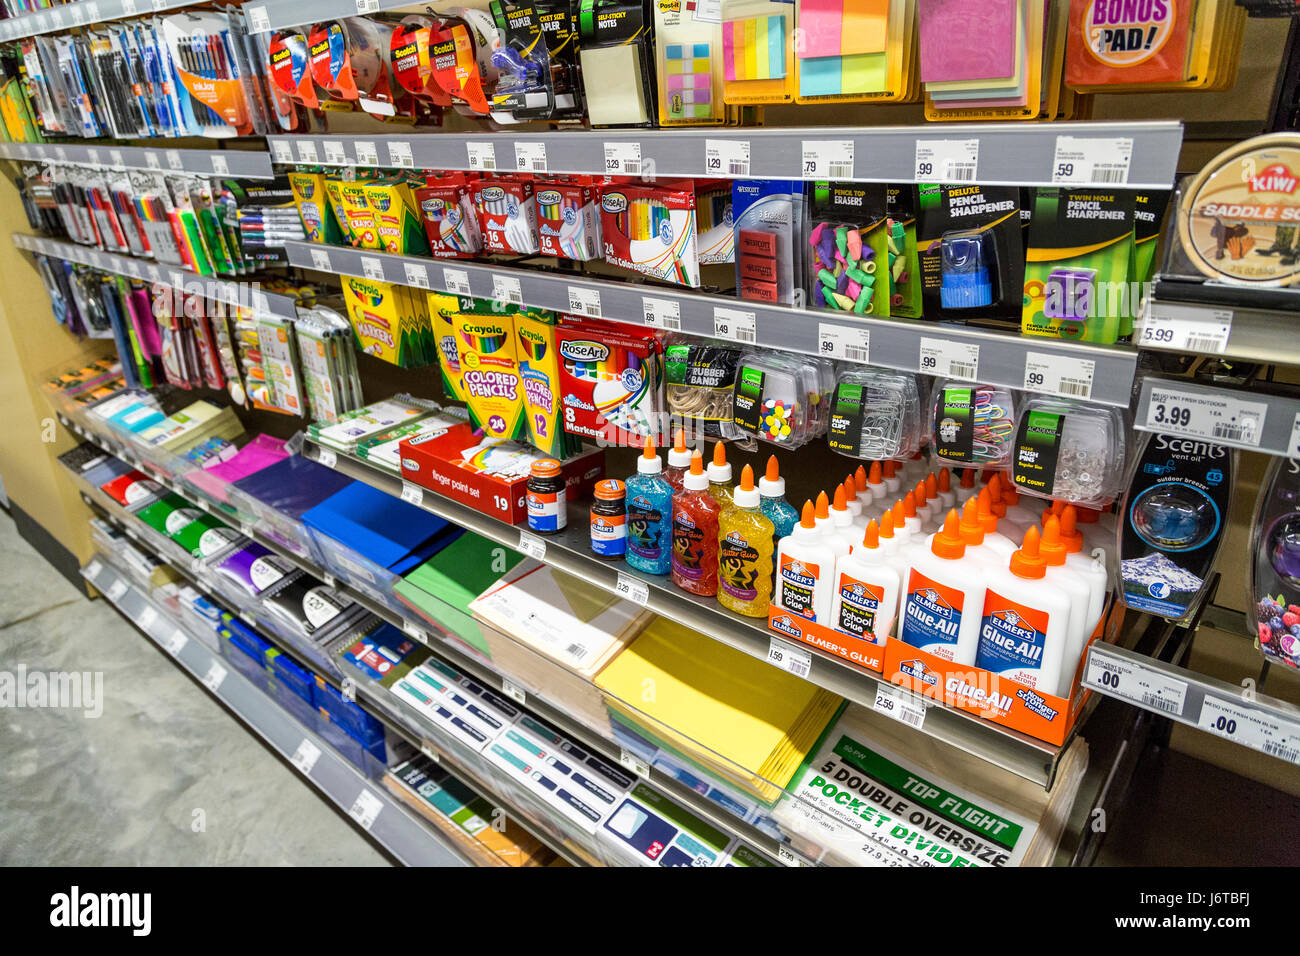 https://c8.alamy.com/comp/J6TBFJ/shelves-of-office-supplies-on-display-shelves-at-a-retail-store-J6TBFJ.jpg